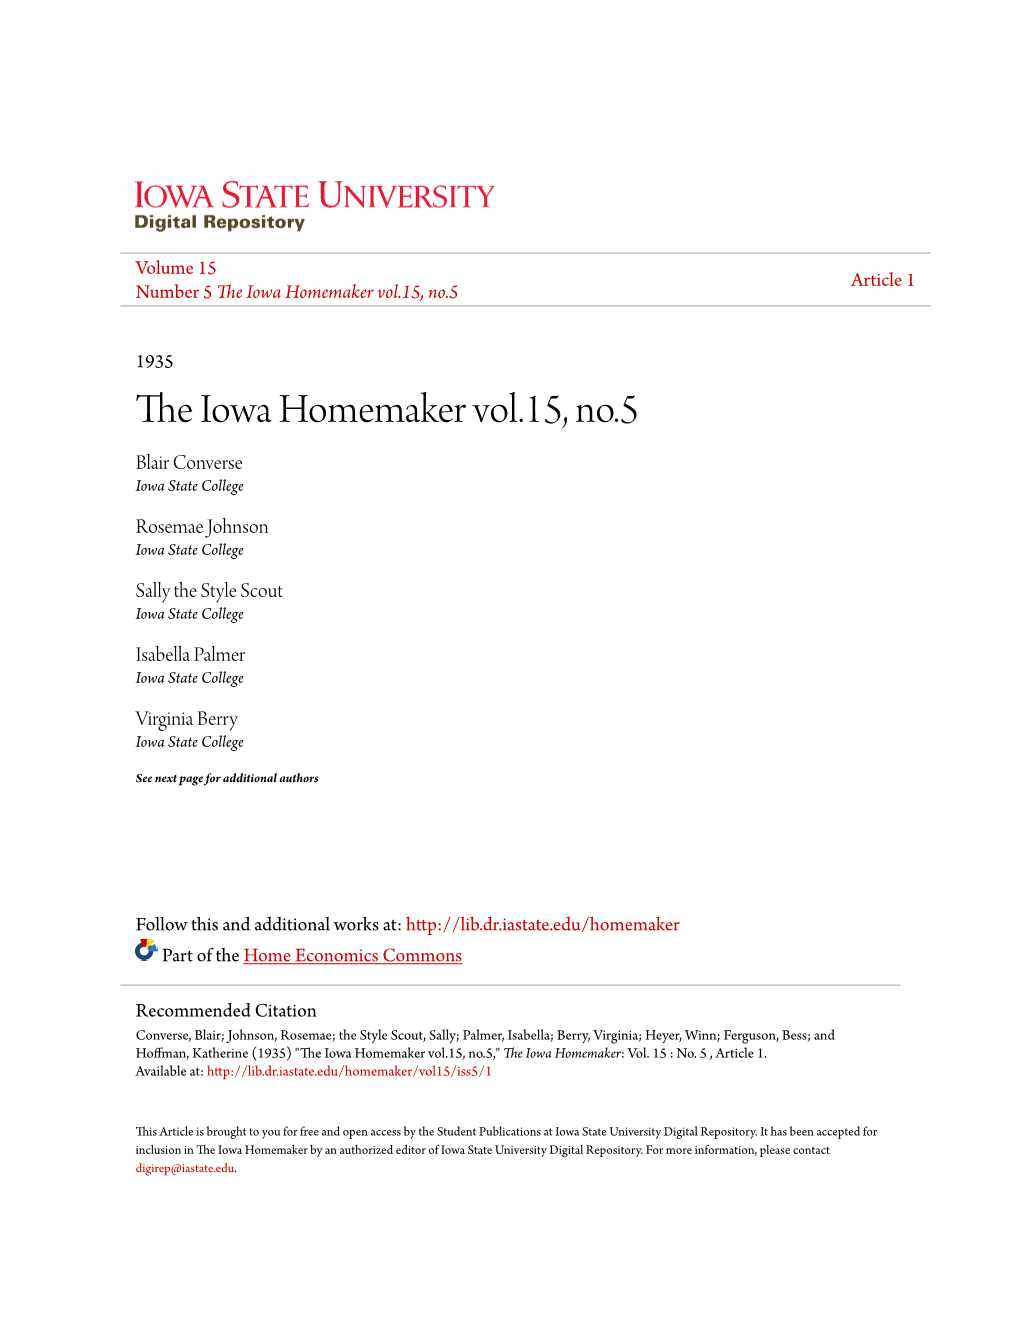 The Iowa Homemaker Vol.15, No.5